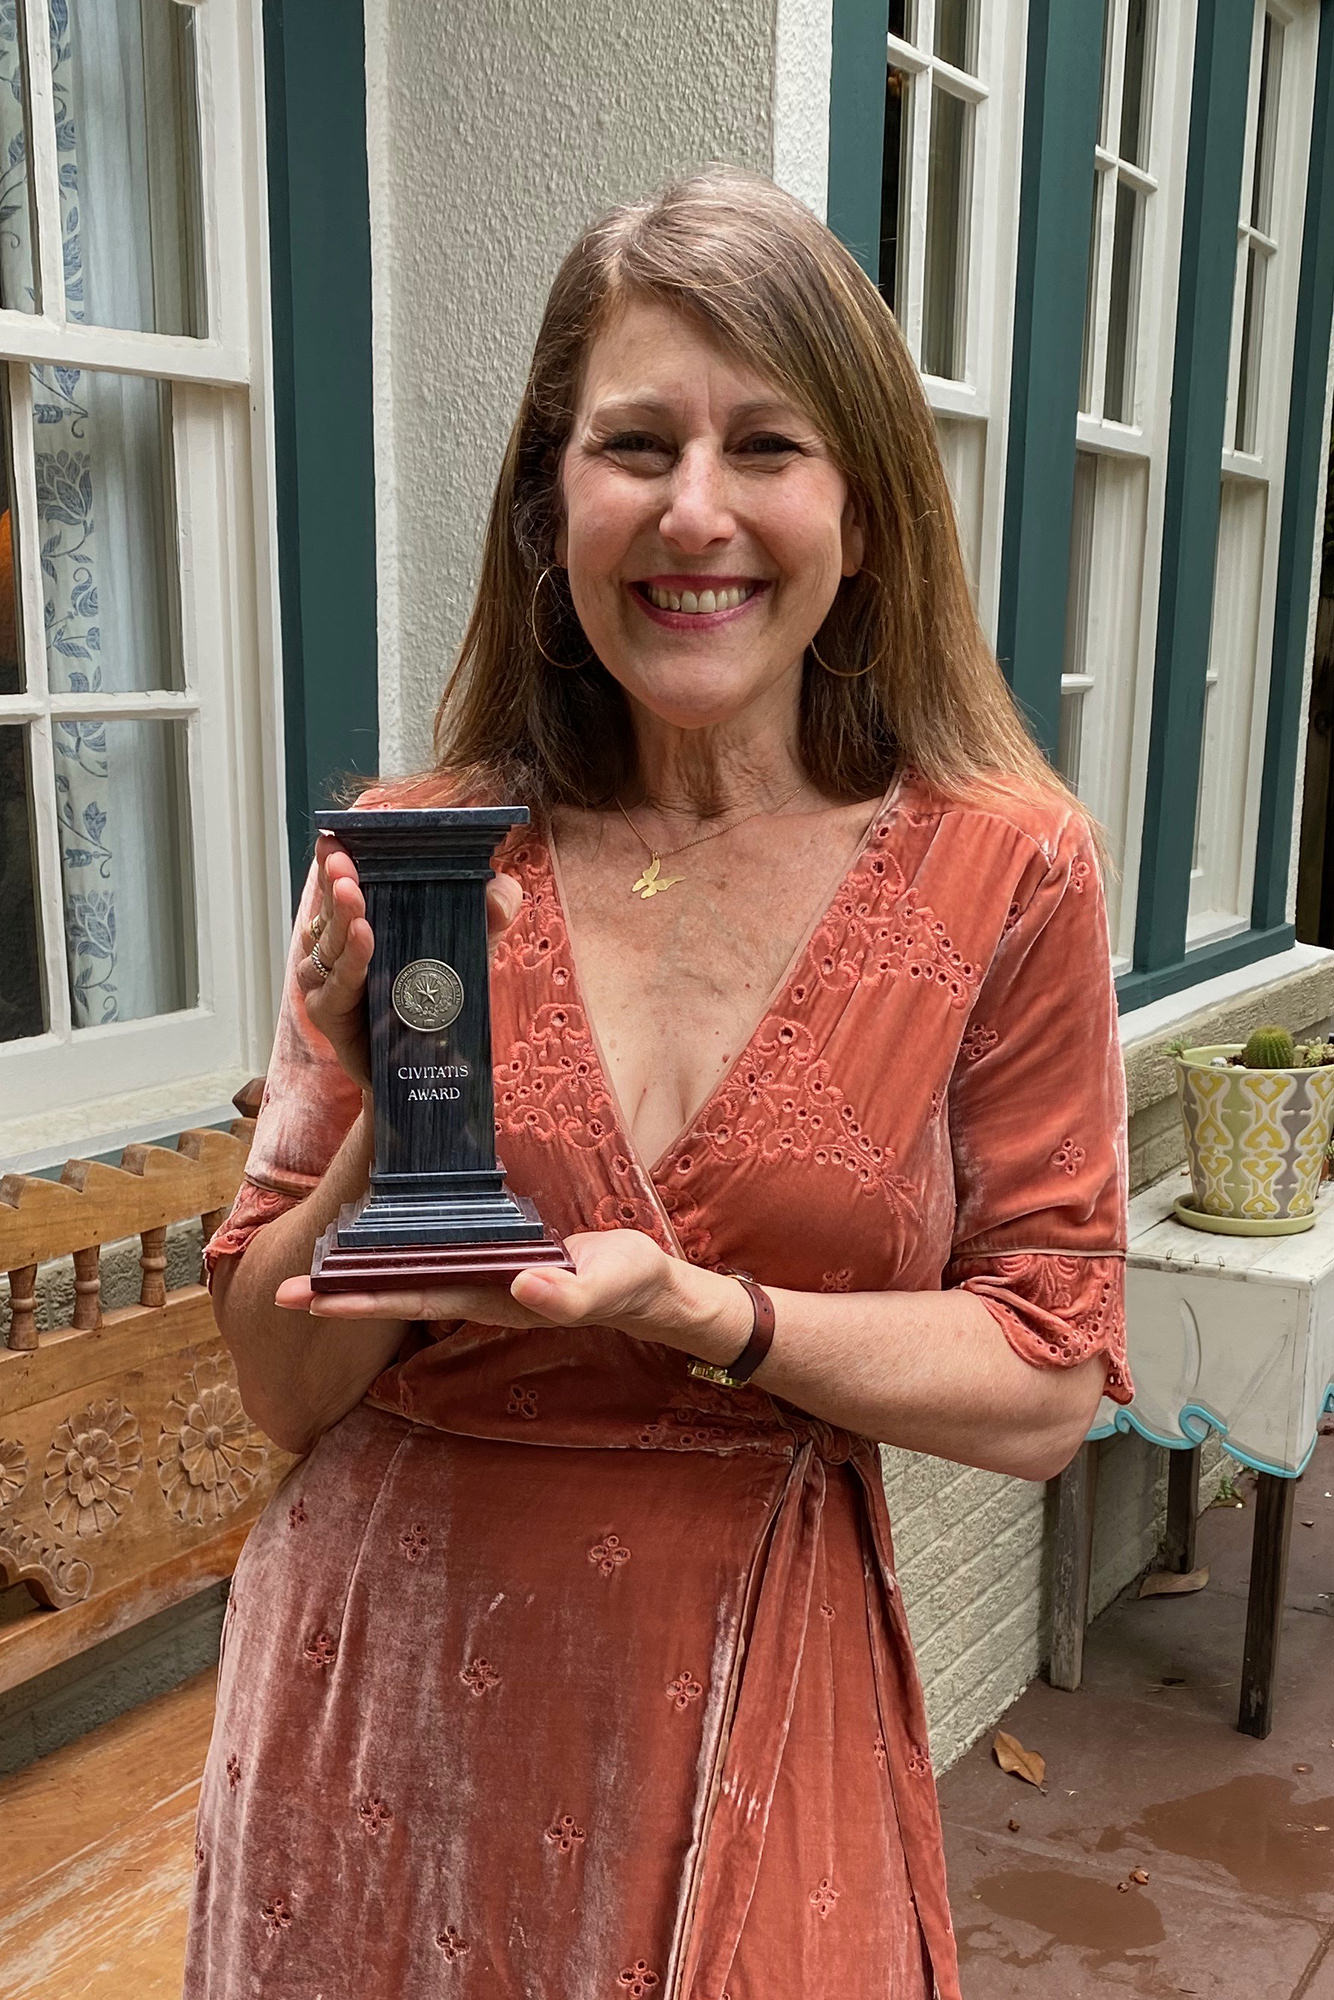 Lori Holleran Steiker with her award